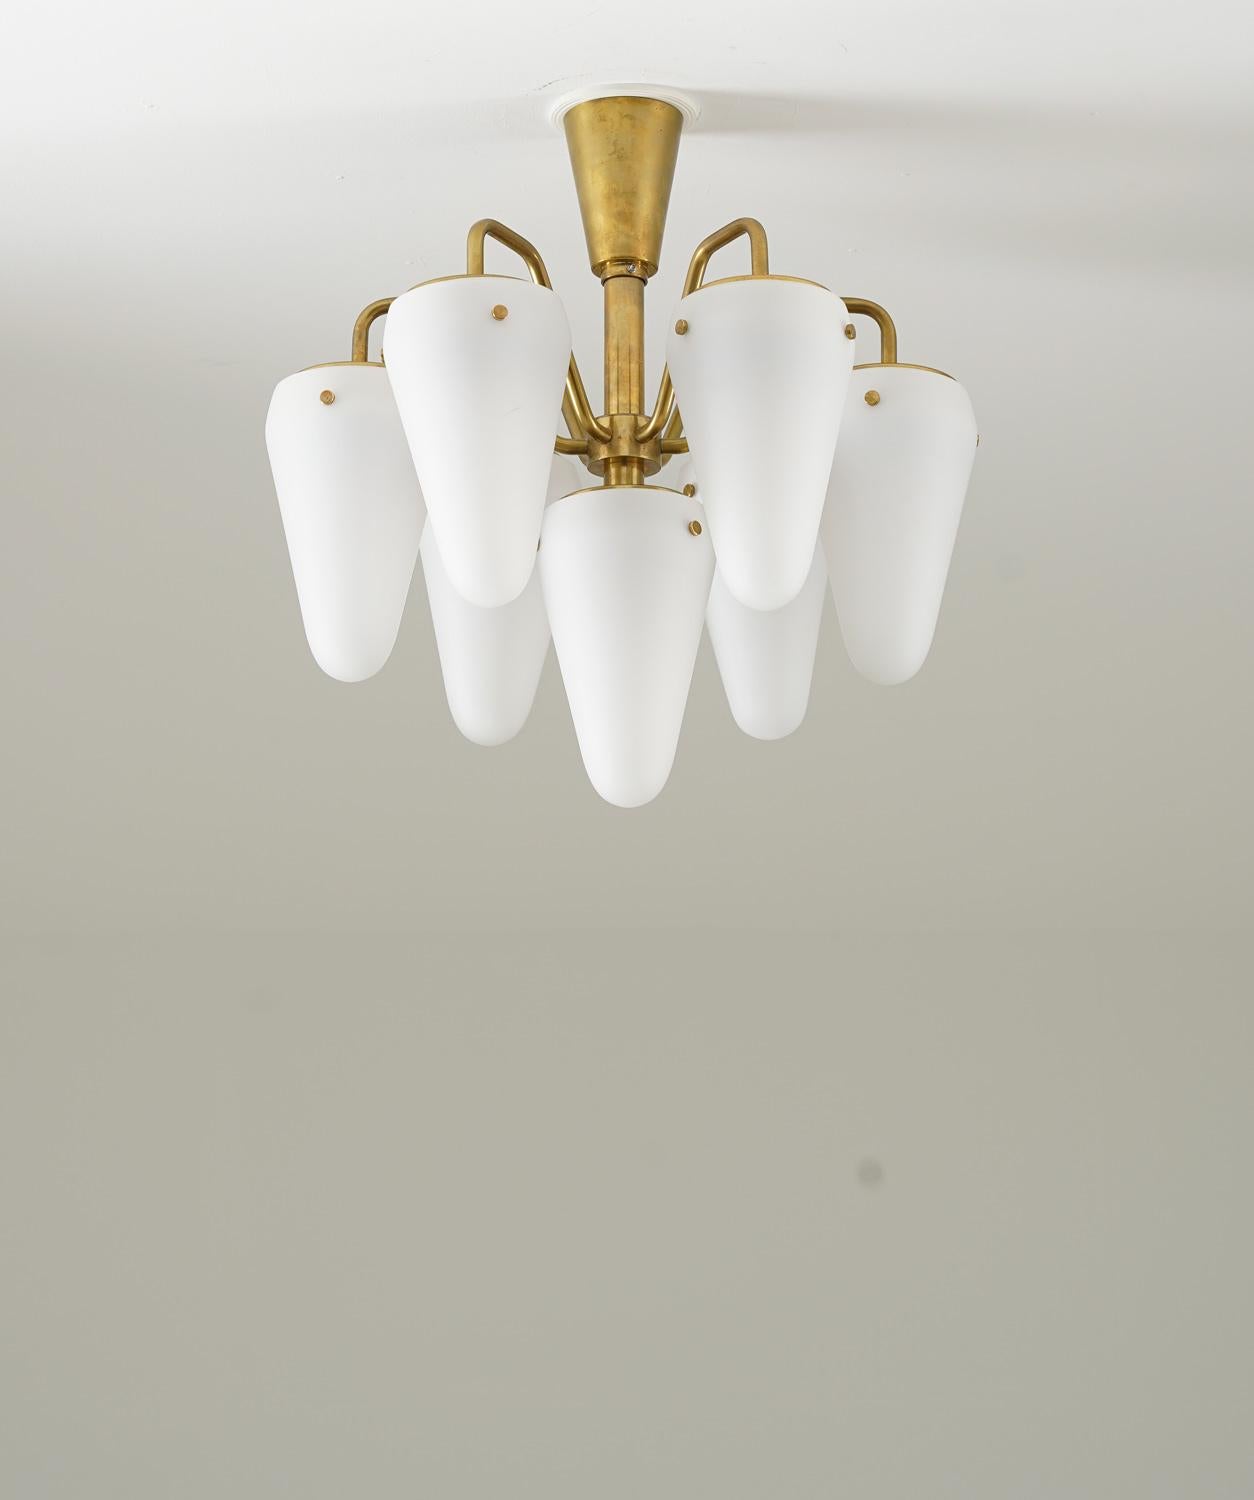 Scandinavian Modern Chandelier in Brass and Glass by Hans-Agne Jakobsson For Sale